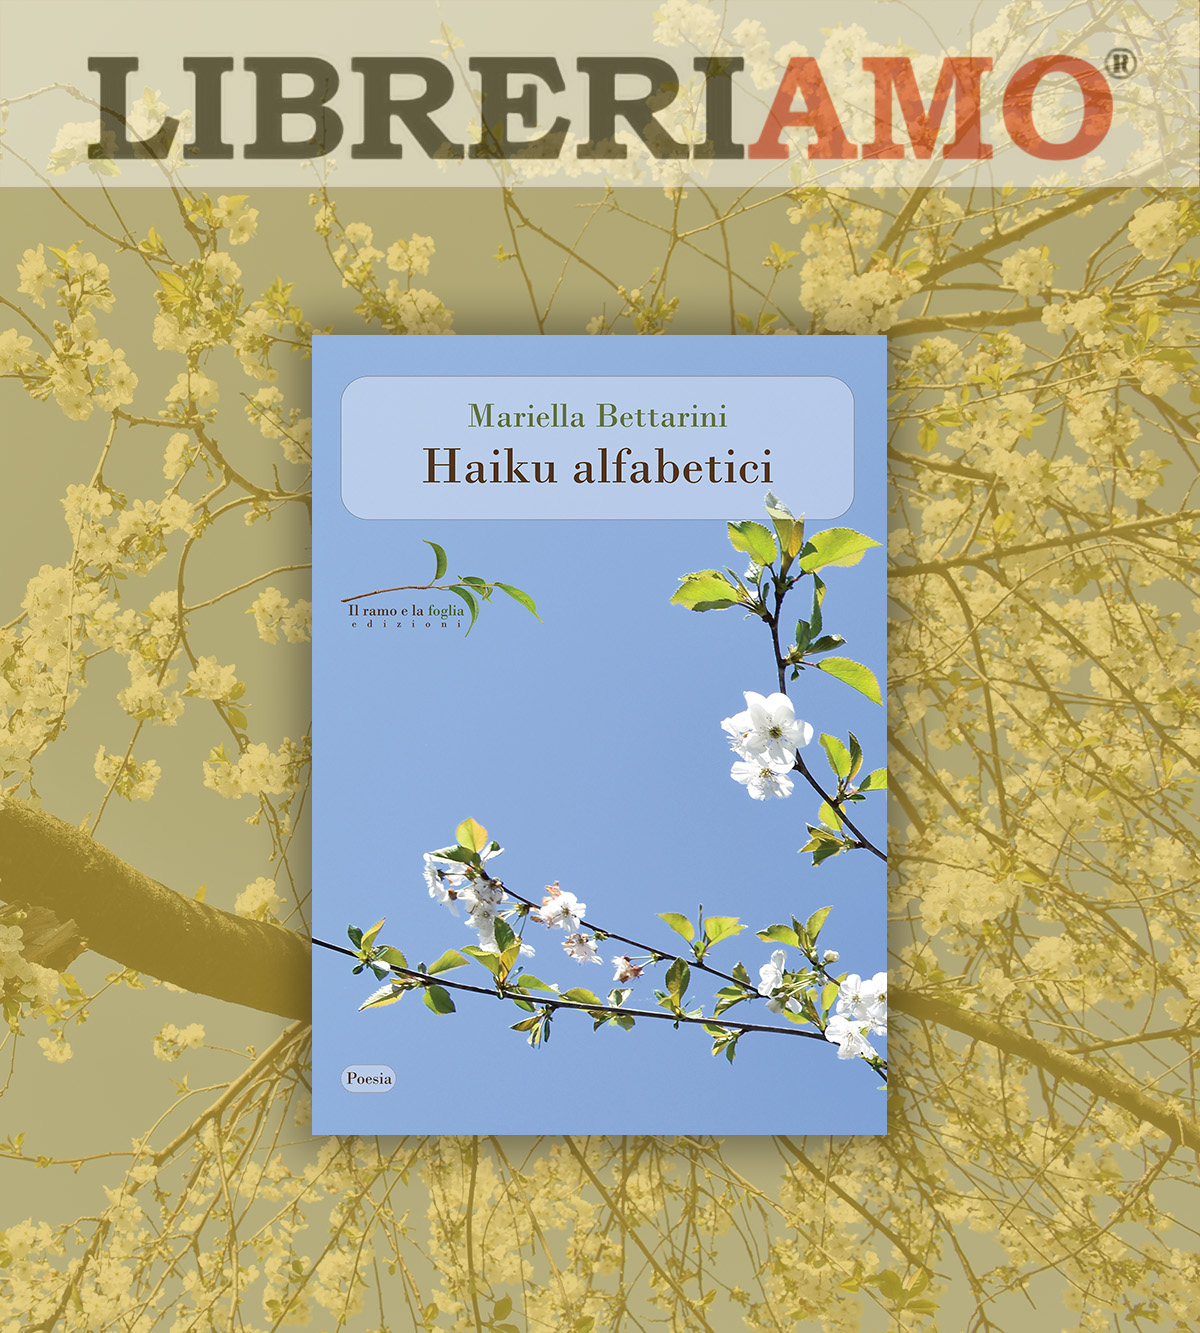 Logo di Libreriamo e copertina di “Haiku alfabetici”